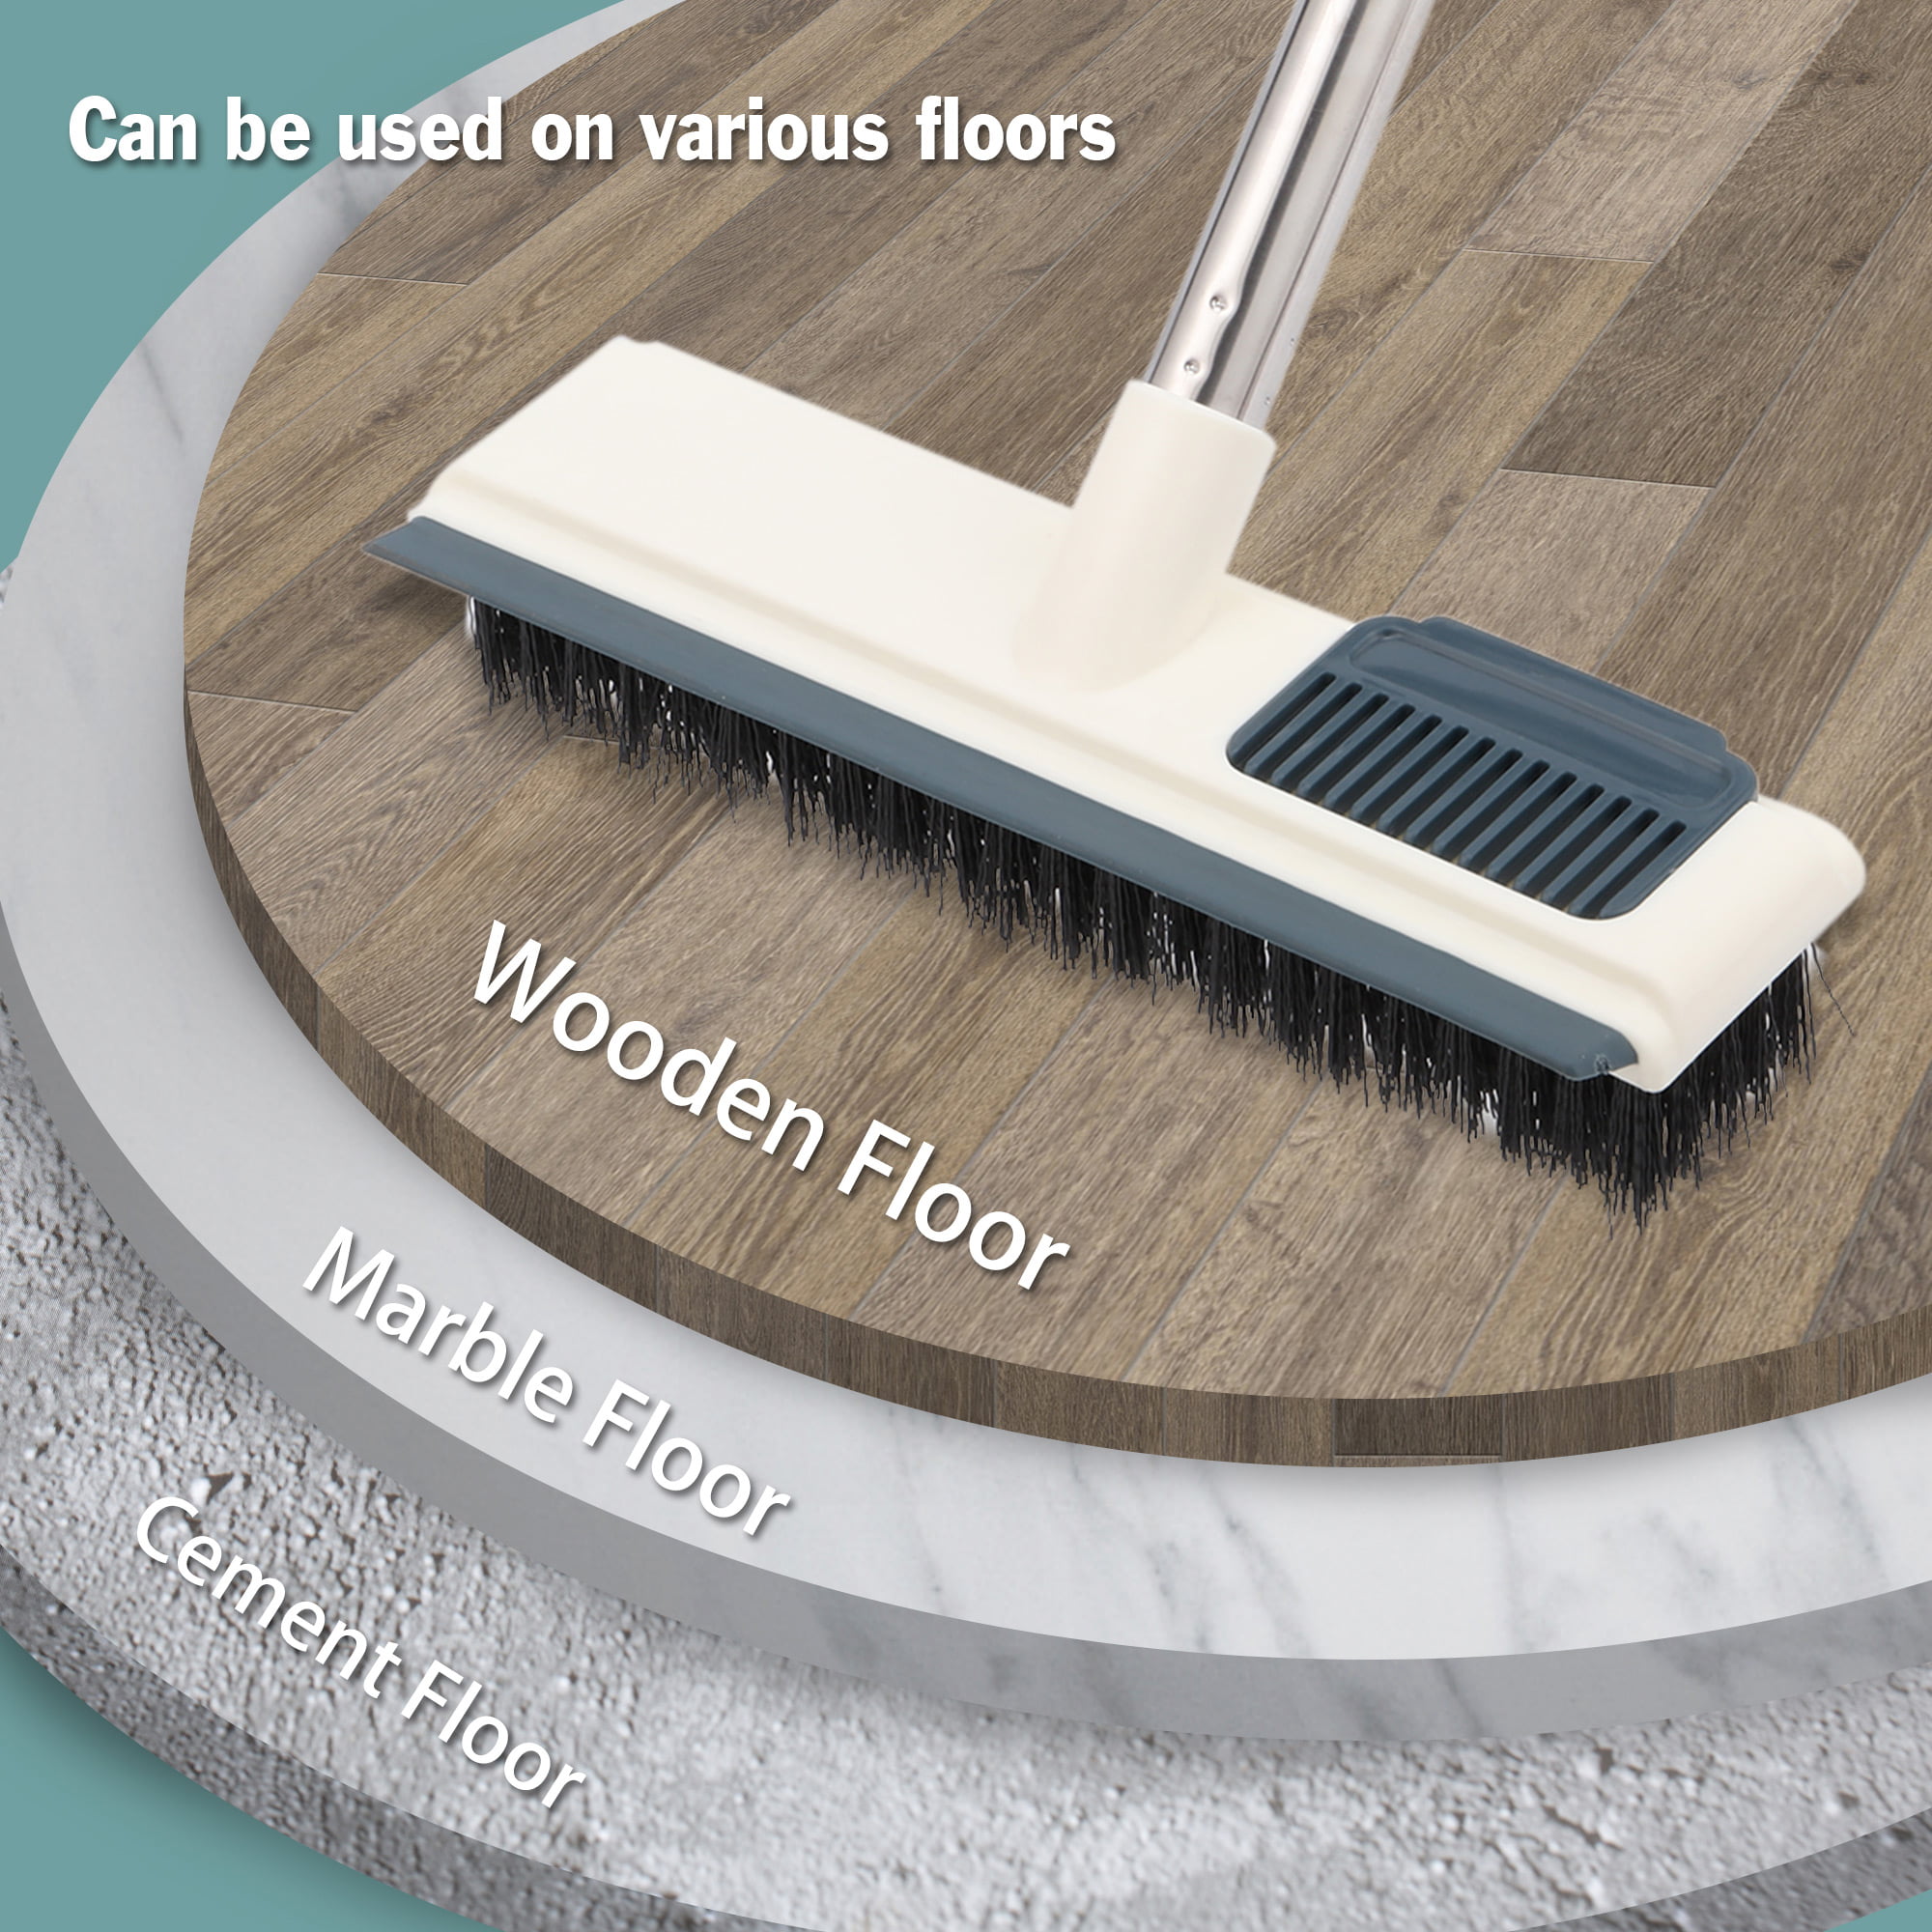 Youloveit 1pc Long Handle Cleaning Brush Floor Scrub Brush Cleaner Tool Long Handle Dust Brush for Bathroom Wall Floors Cleaning Scrub Bathtub Patio